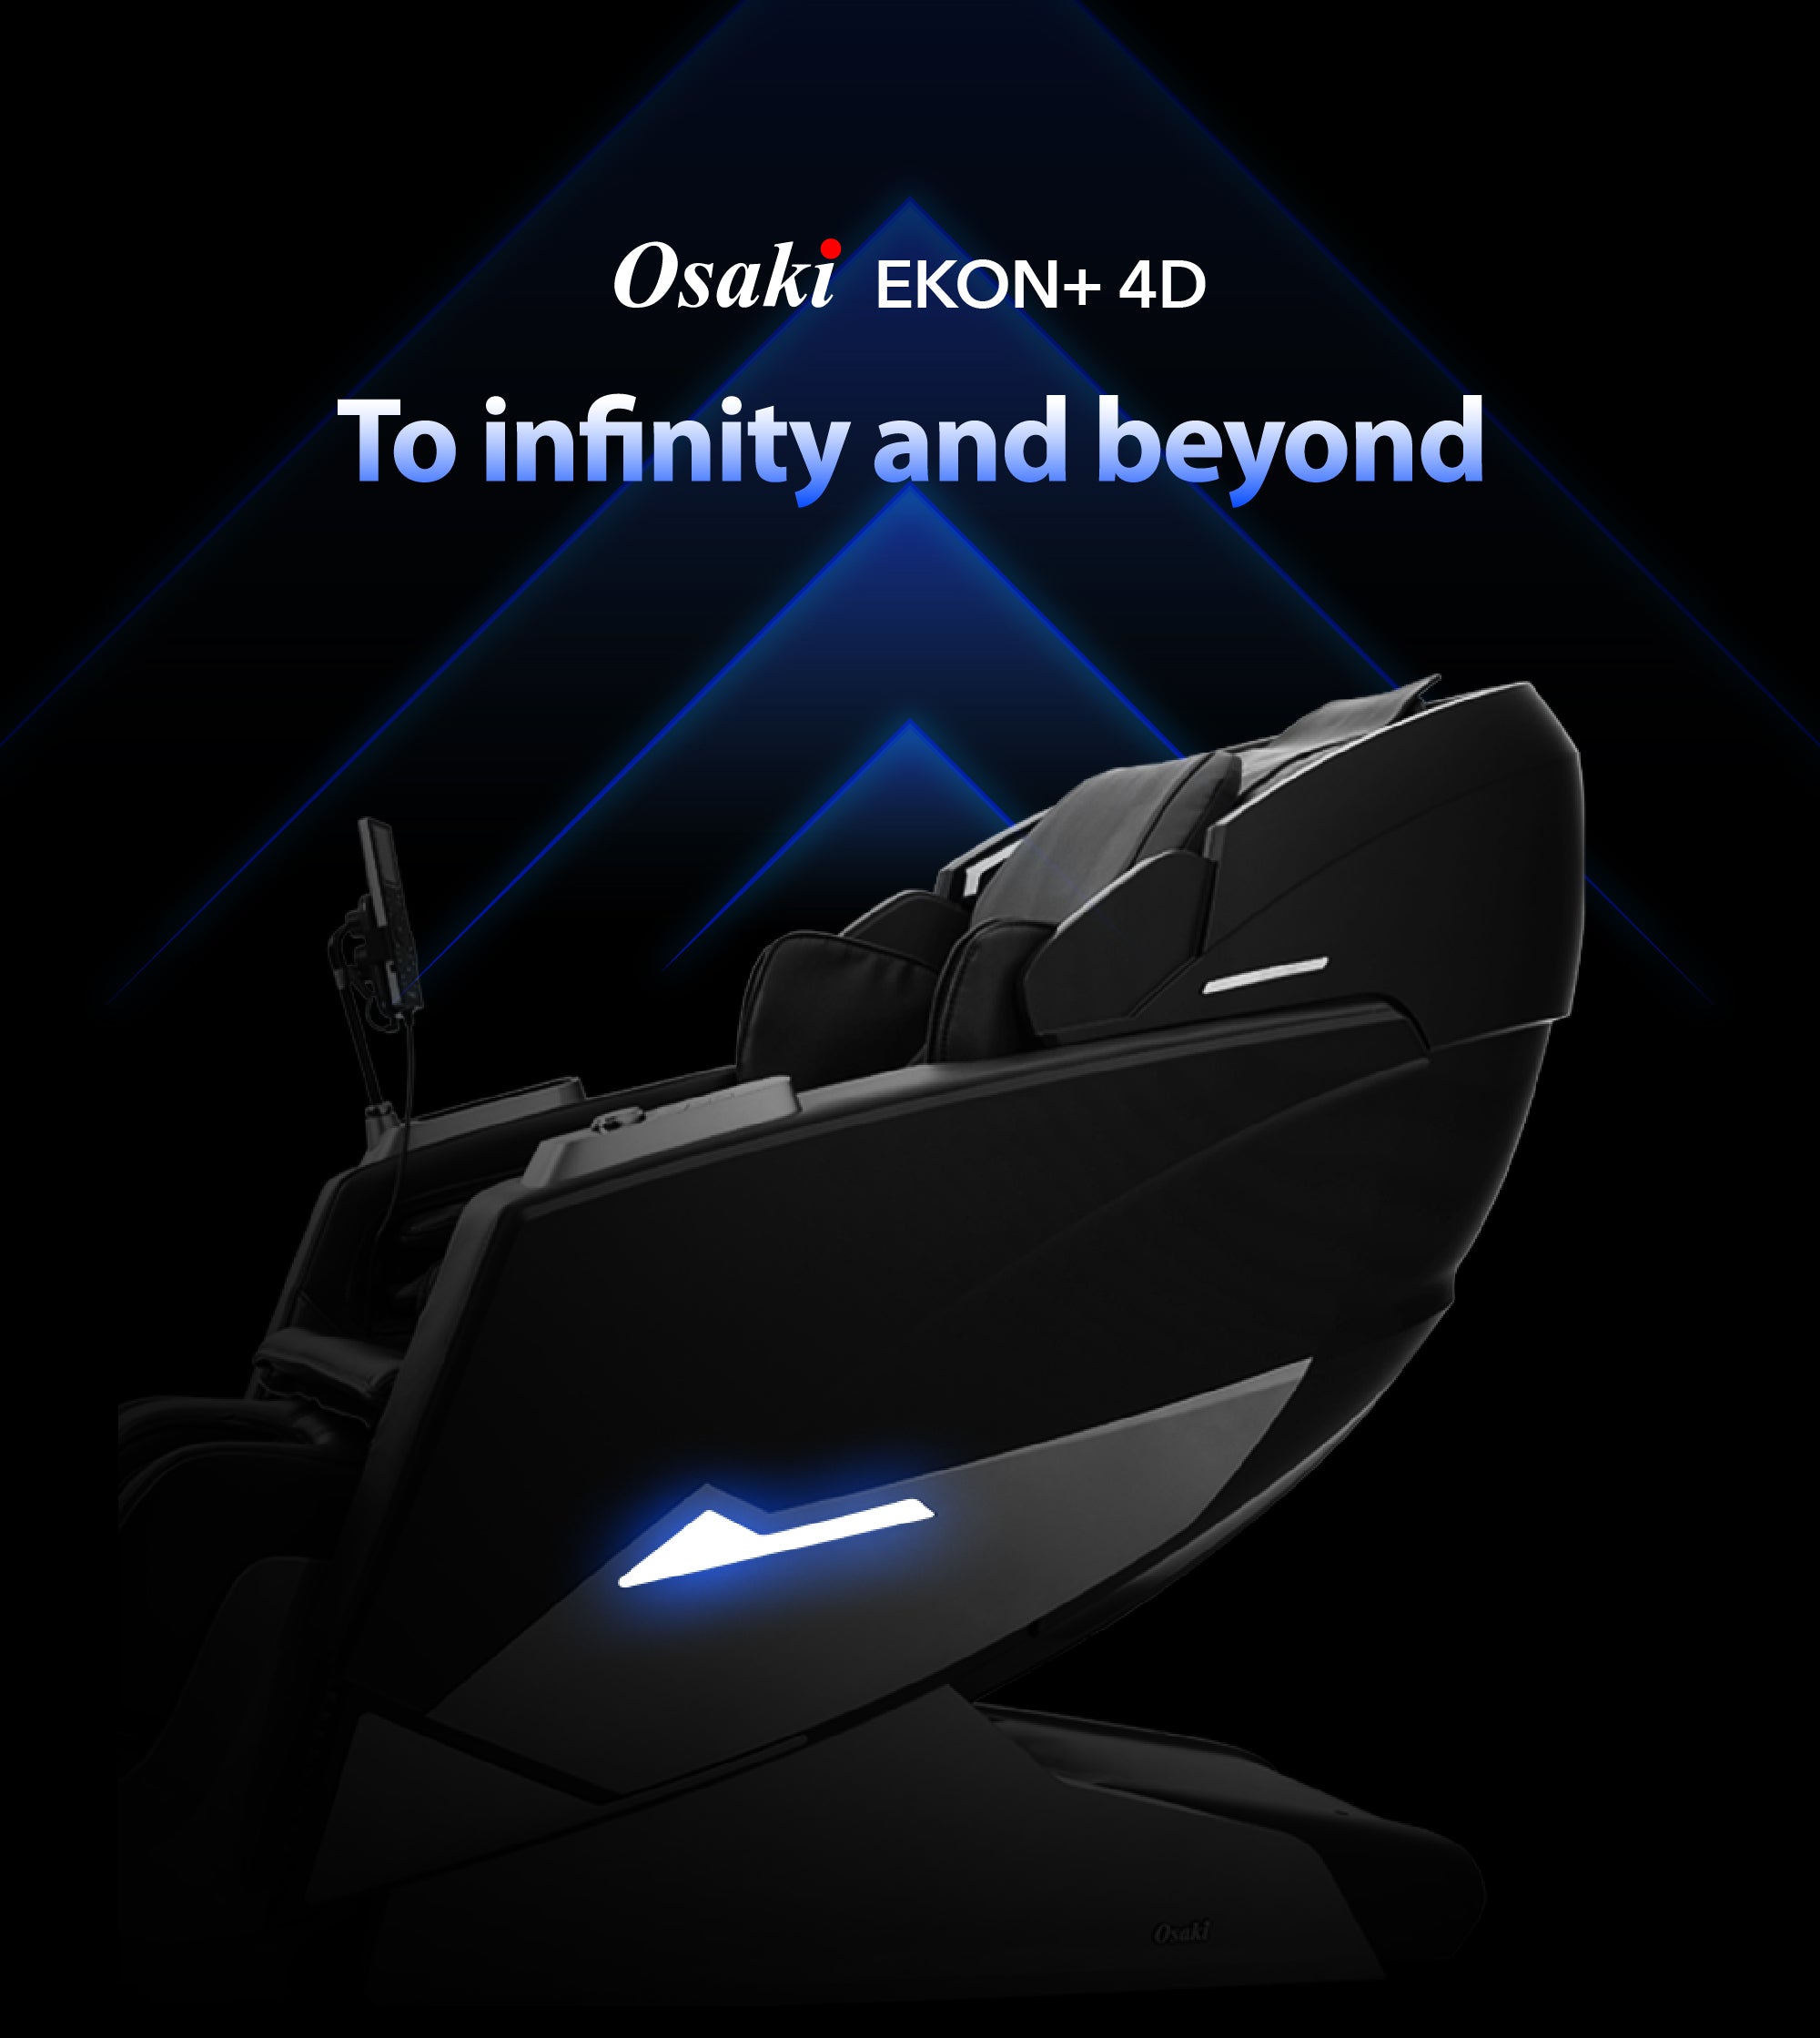 Osaki OS-4D Pro Ekon Plus Full Body Massage Chair, Overview